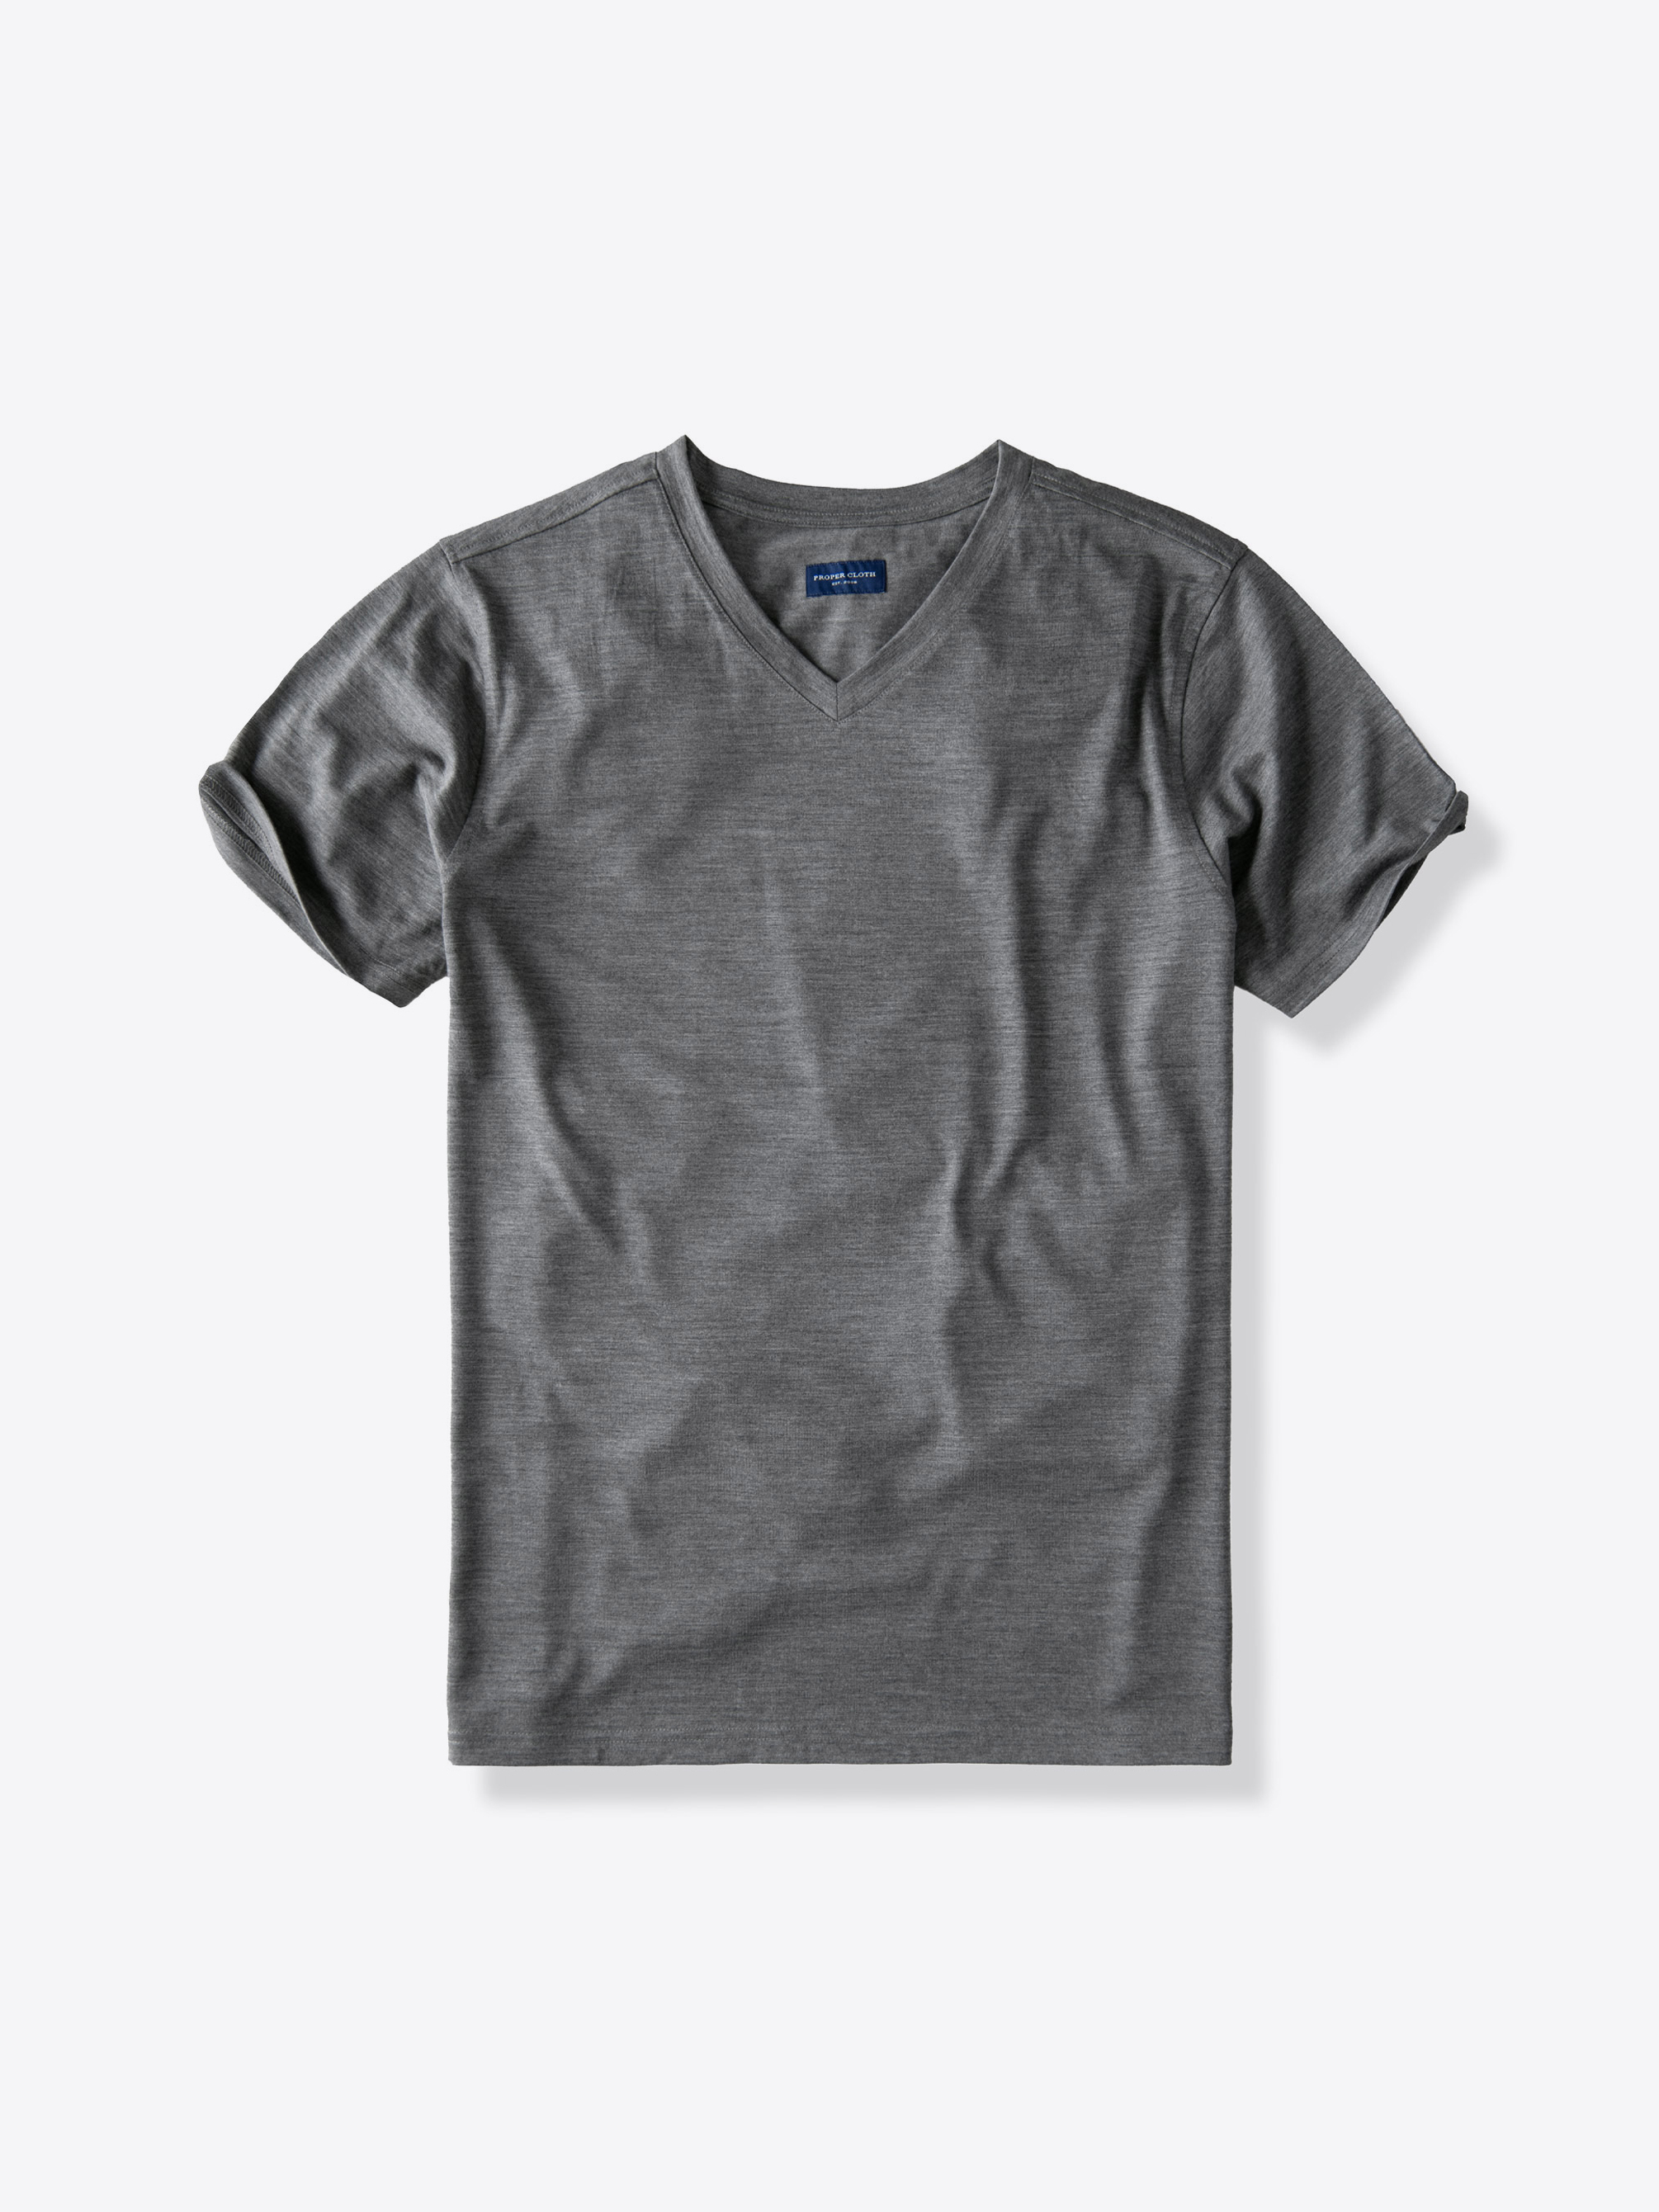 Grey Merino Wool V-Neck T-Shirt by Proper Cloth